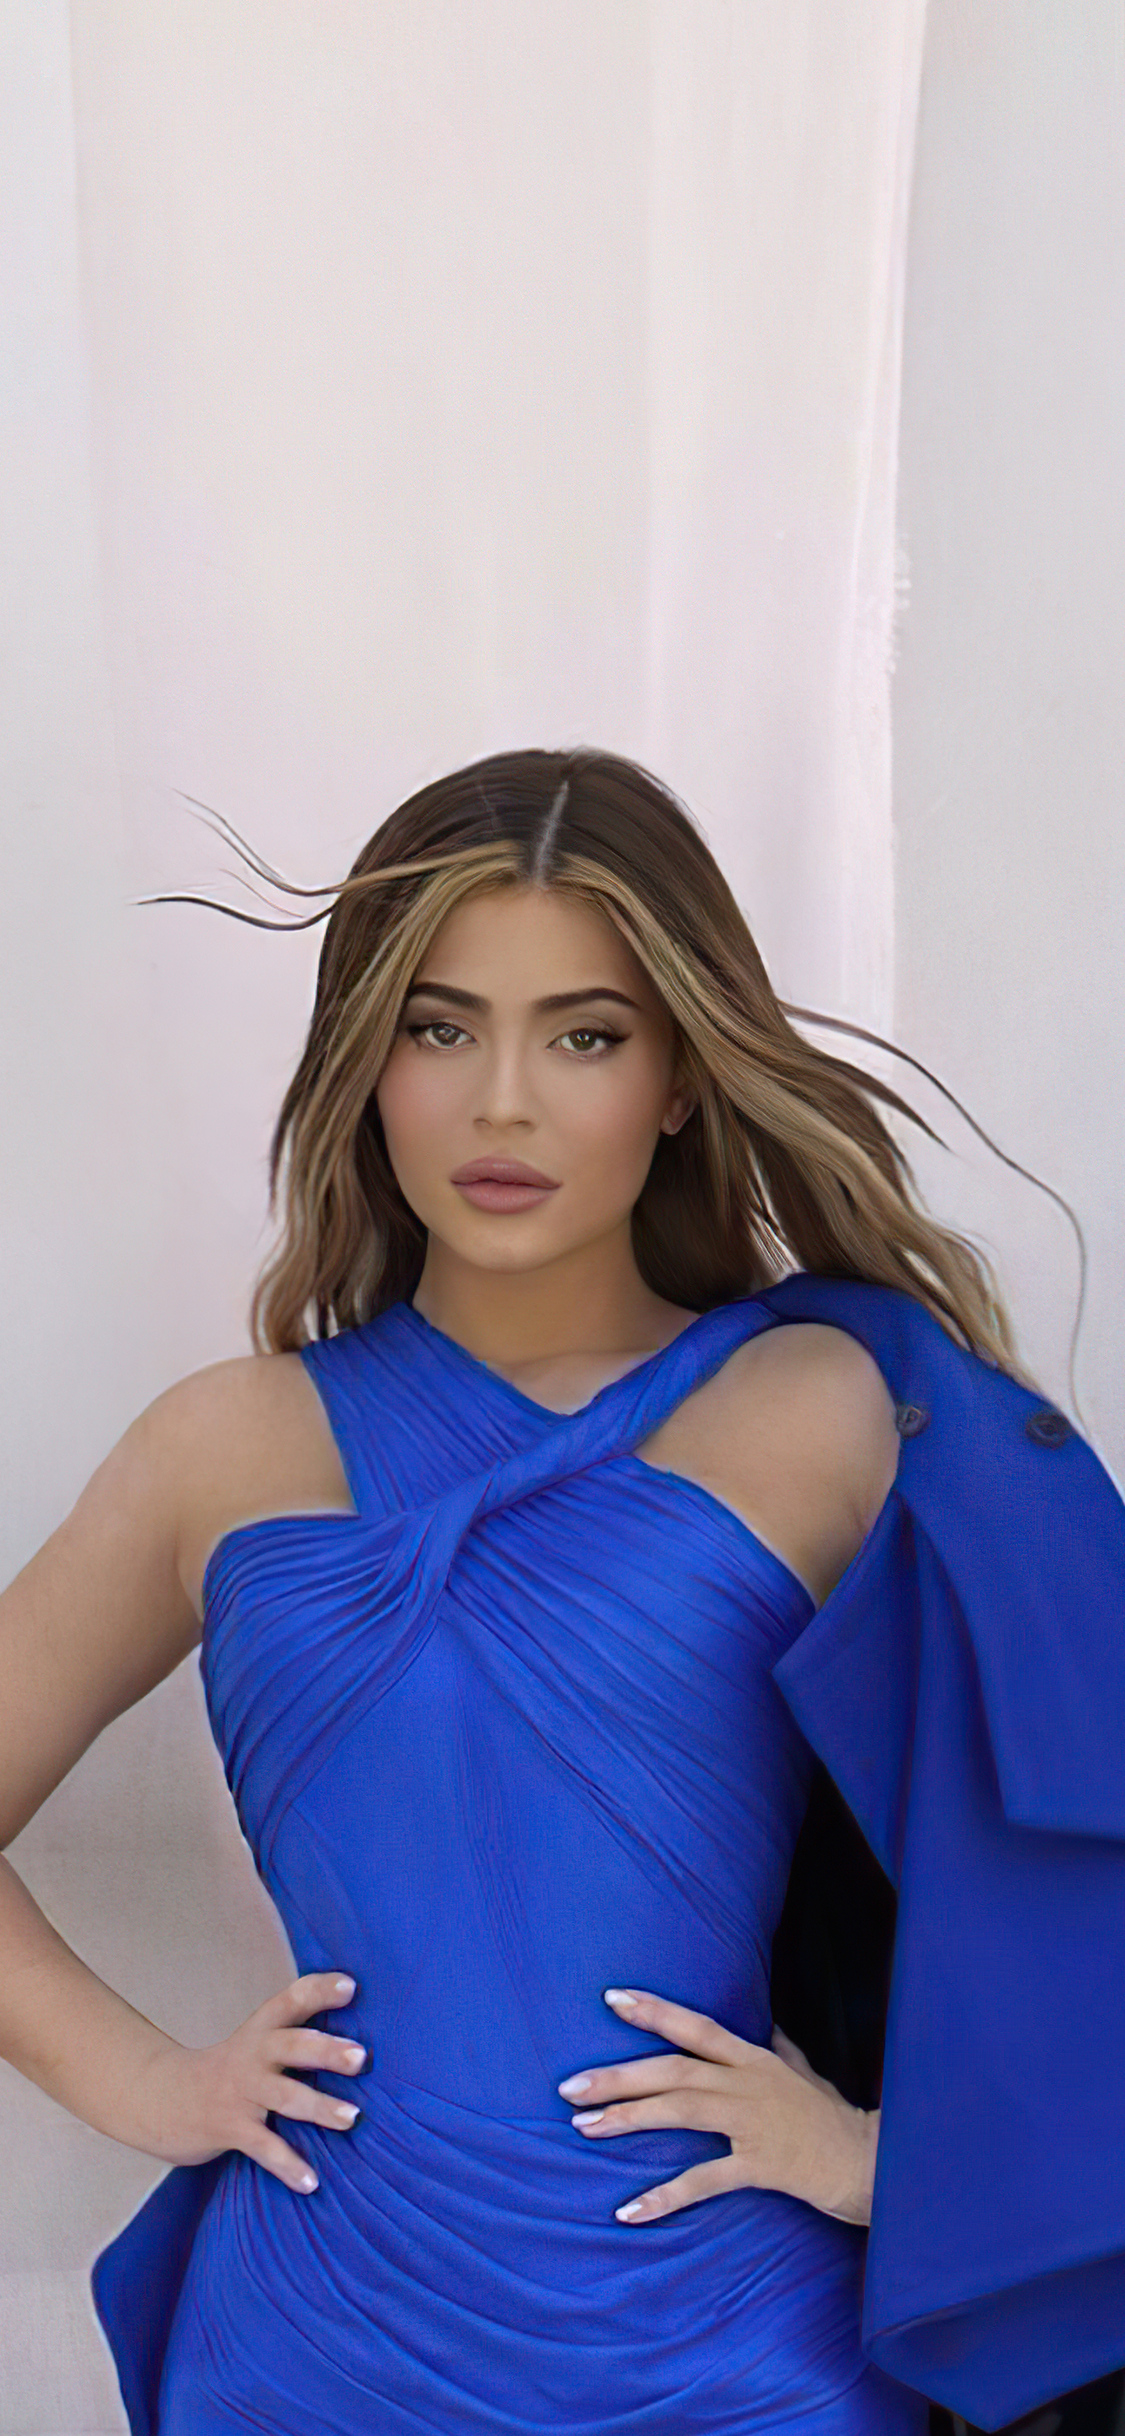 19 Kylie Jenner 2019 Wallpapers  WallpaperSafari